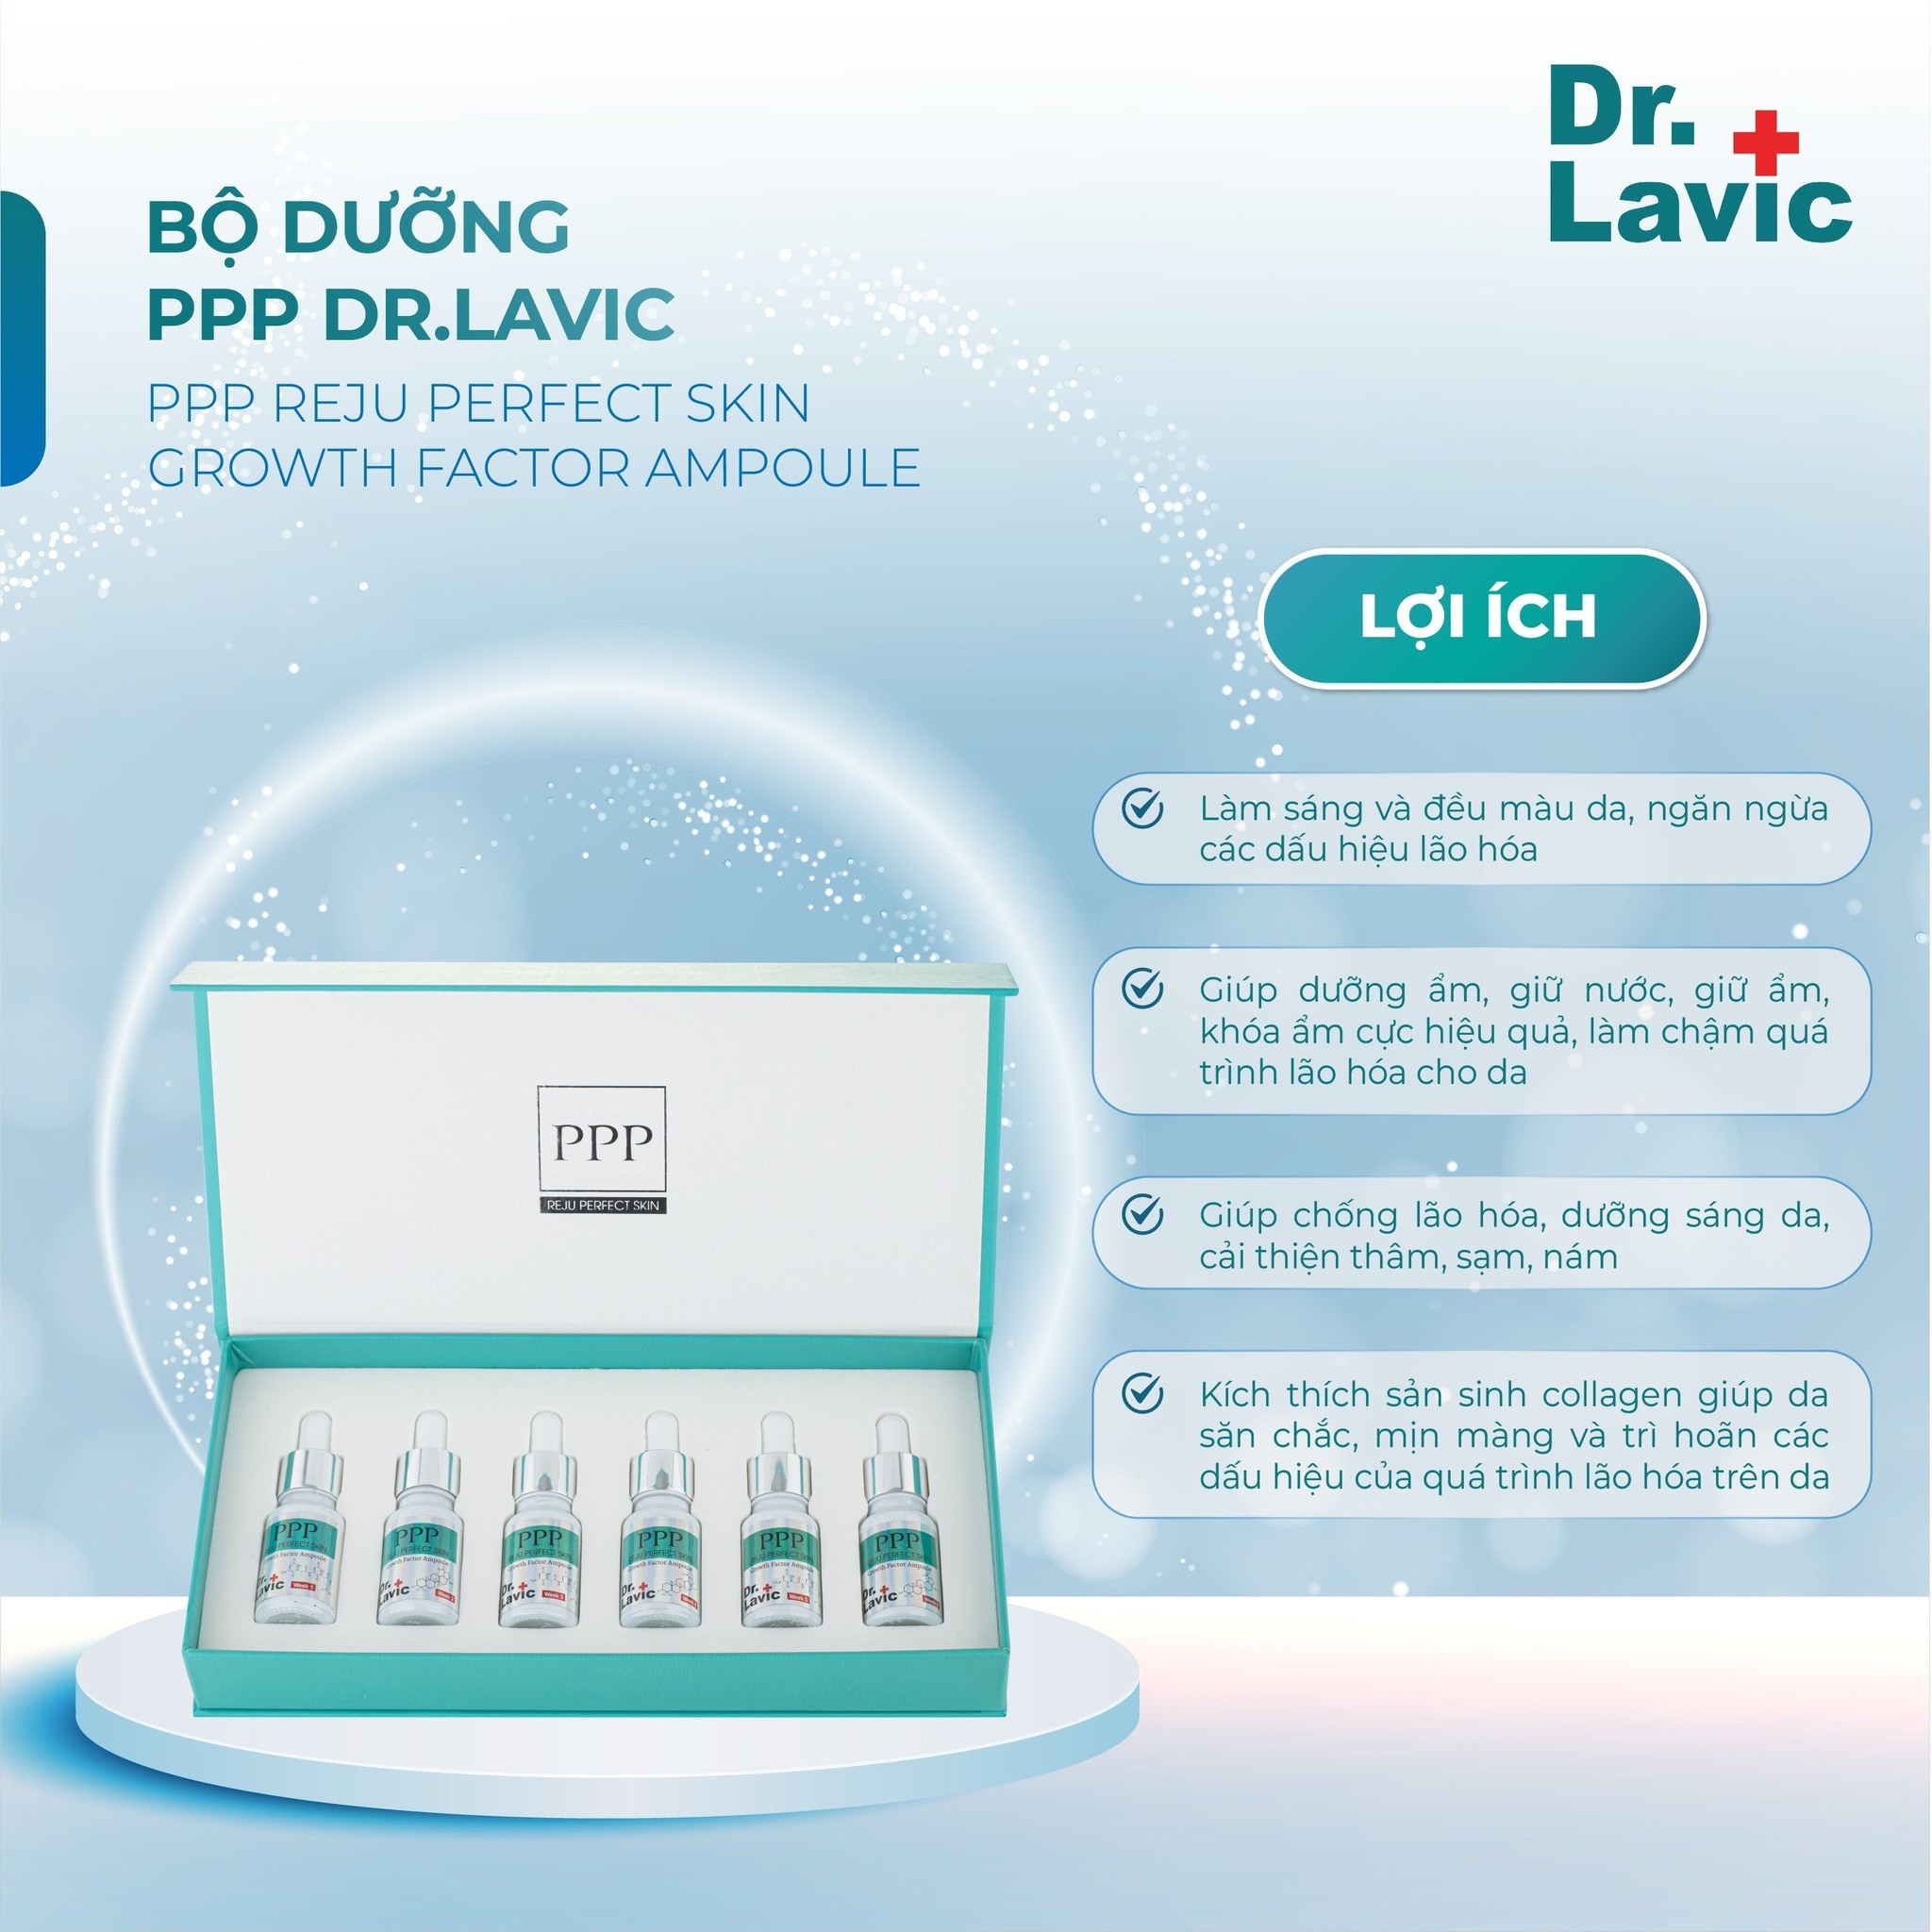 Bộ Dưỡng PPP  Reju Perfect Skin ( Growth Factor Ampoule )  DR.LAVIC DR921